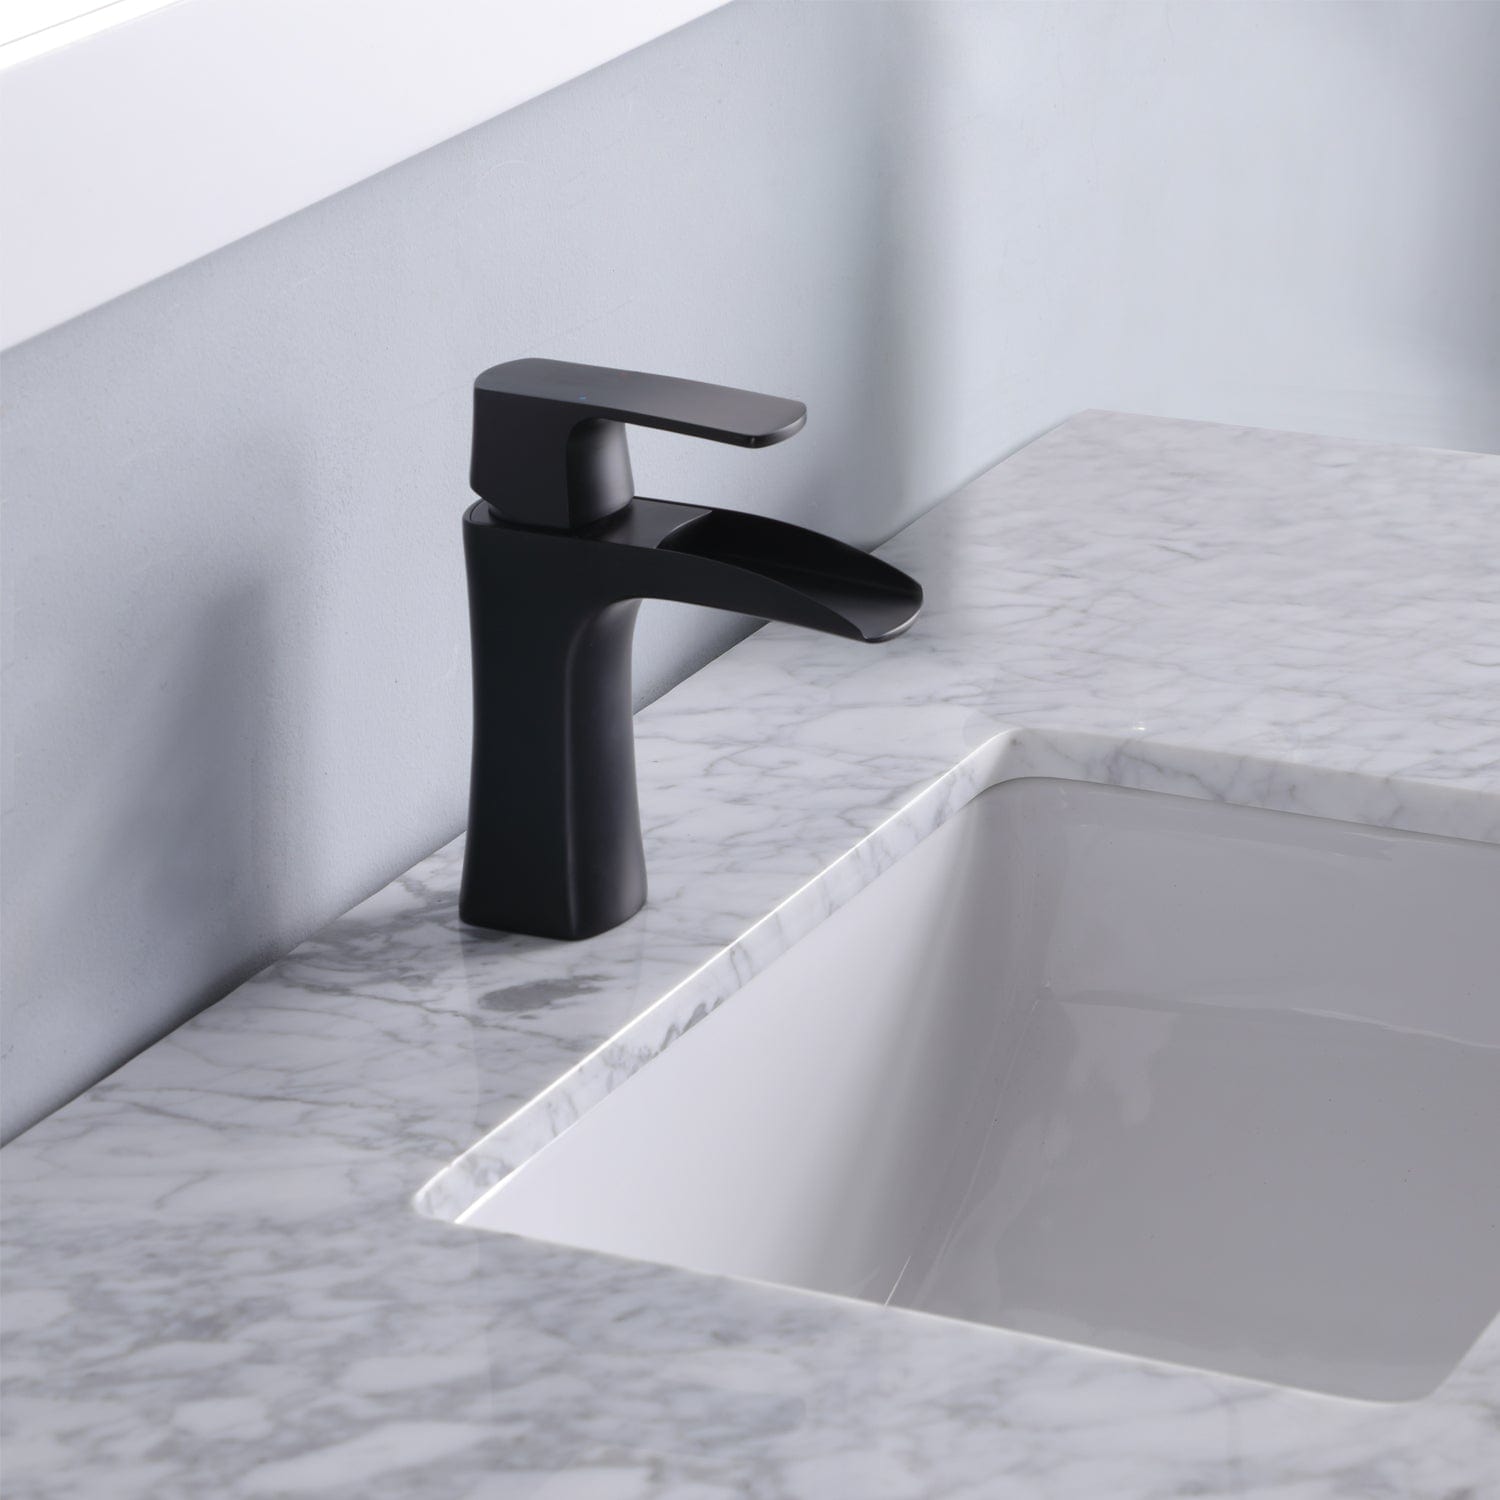 Altair Maribella 48" Single Bathroom Vanity Set in White and Carrara White Marble Countertop with Mirror 535048-WH-CA - Molaix631112970334Vanity535048-WH-CA